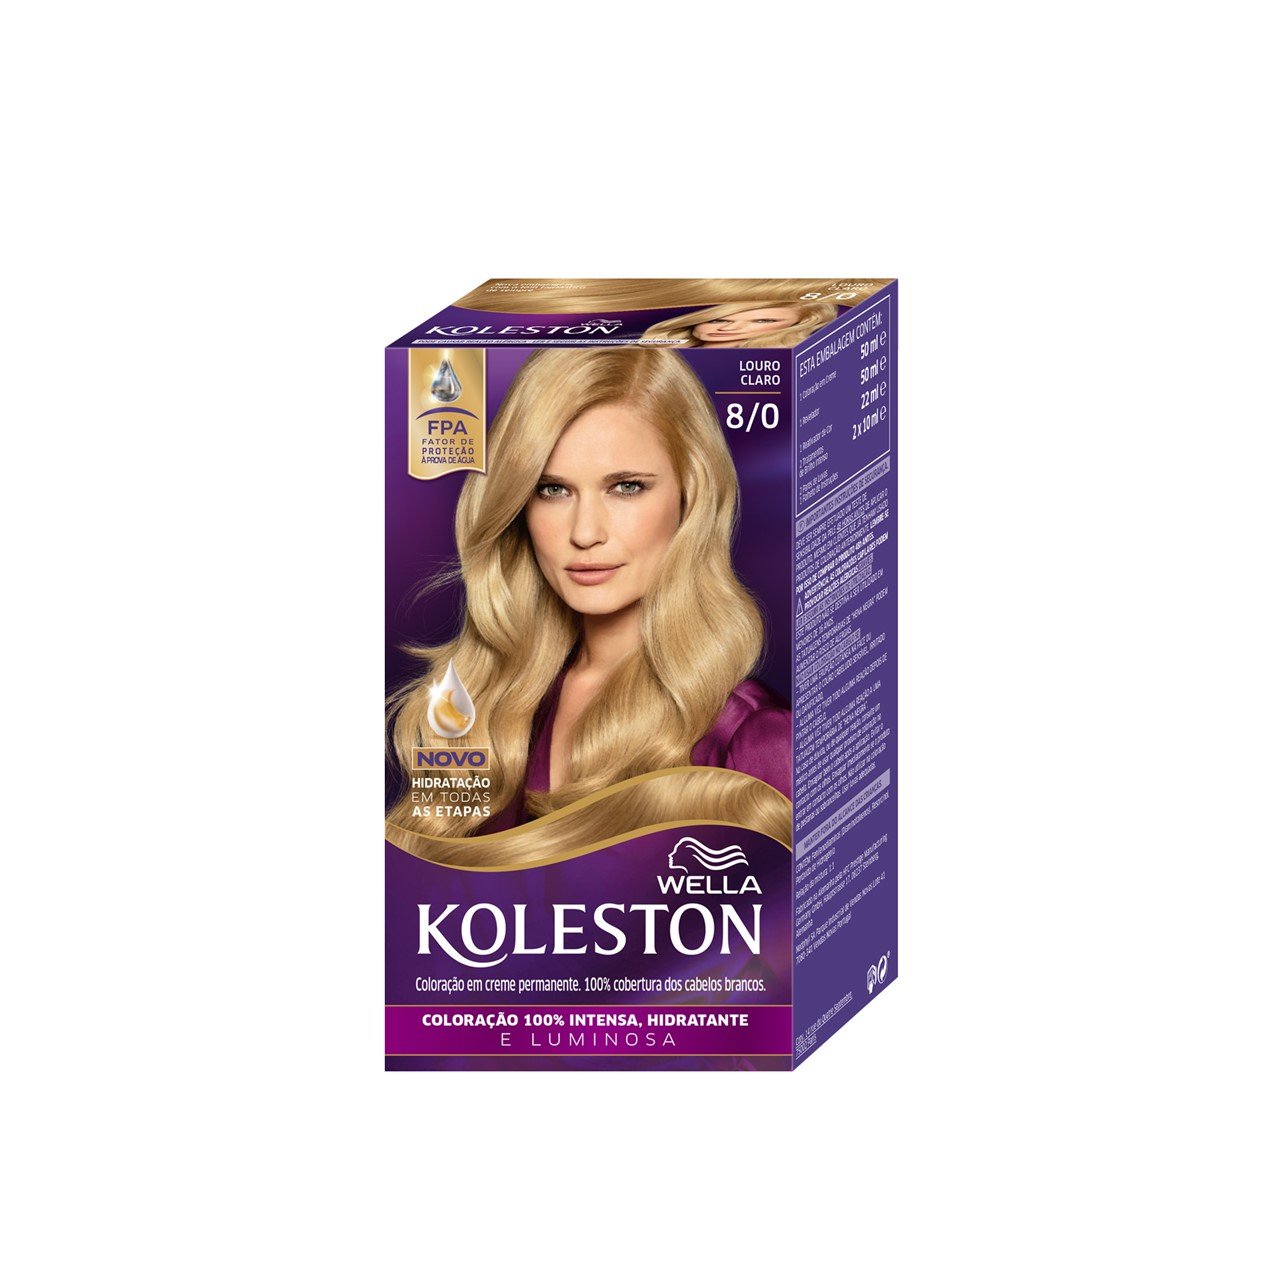 Wella Koleston 8/0 Light Blonde Permanent Hair Color